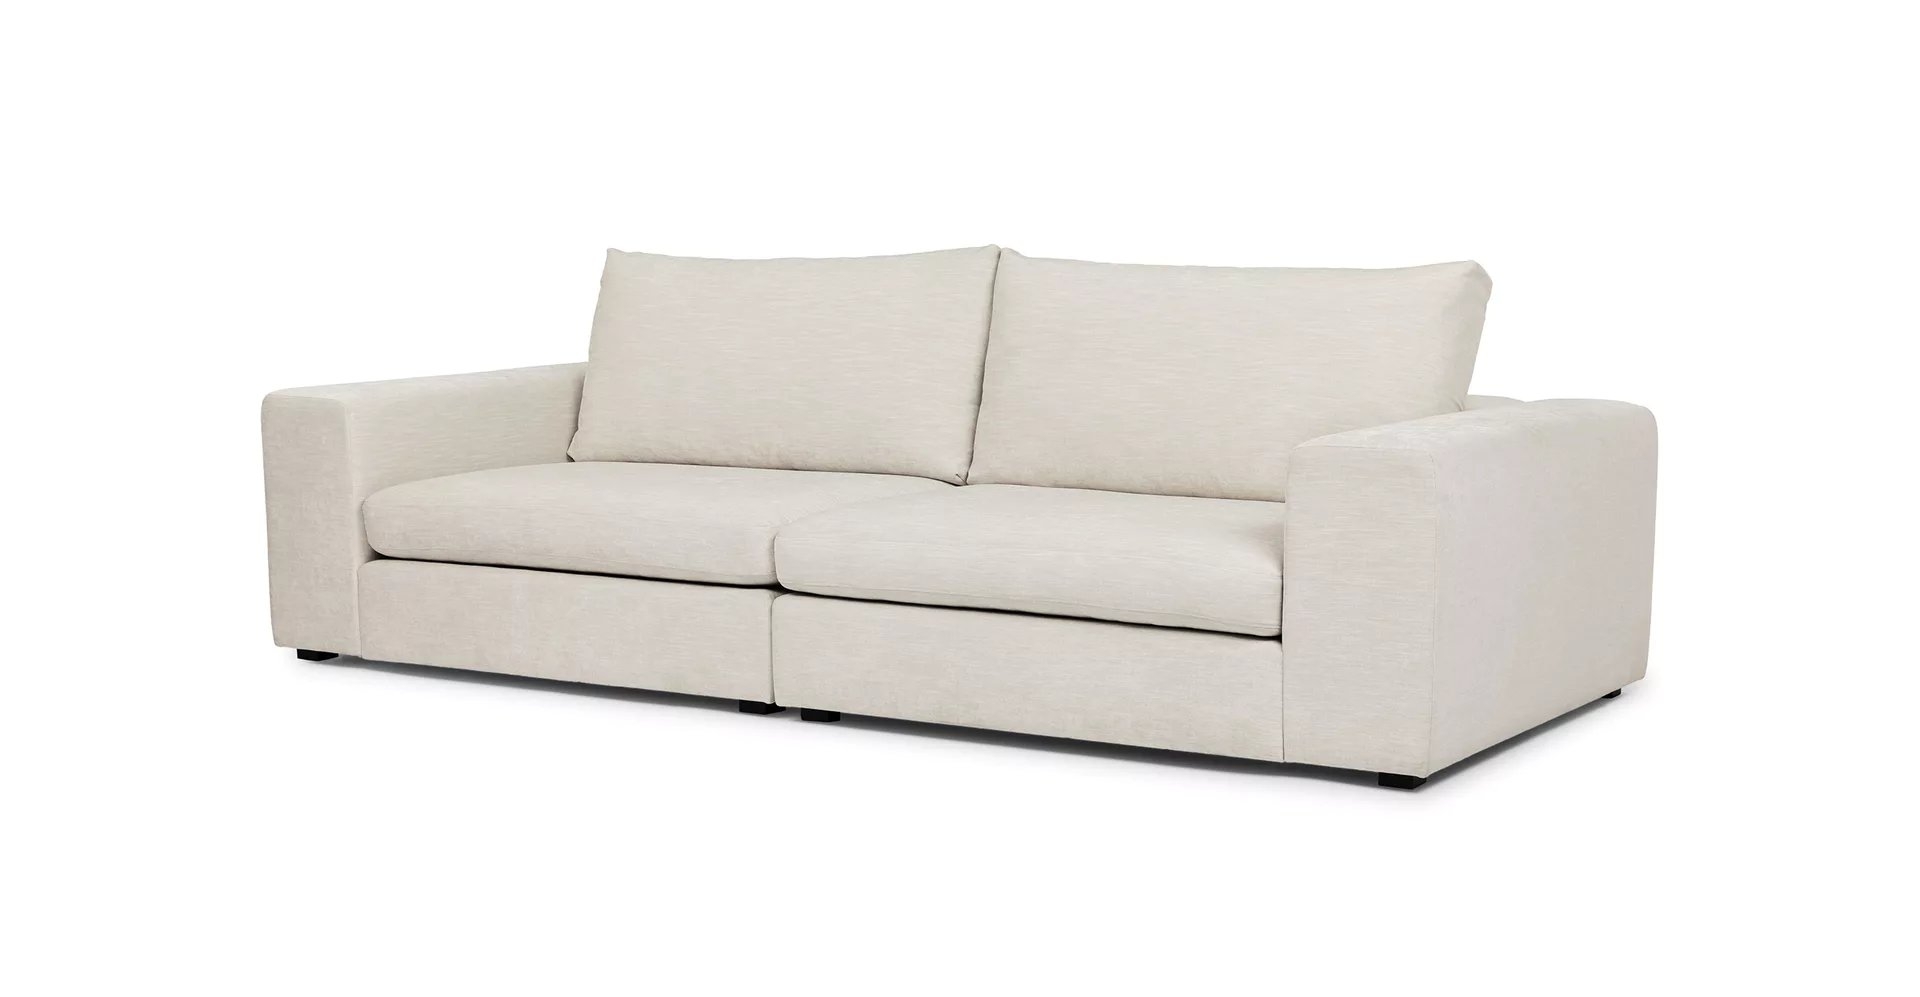 Gaba Pearl White Sofa - Image 1